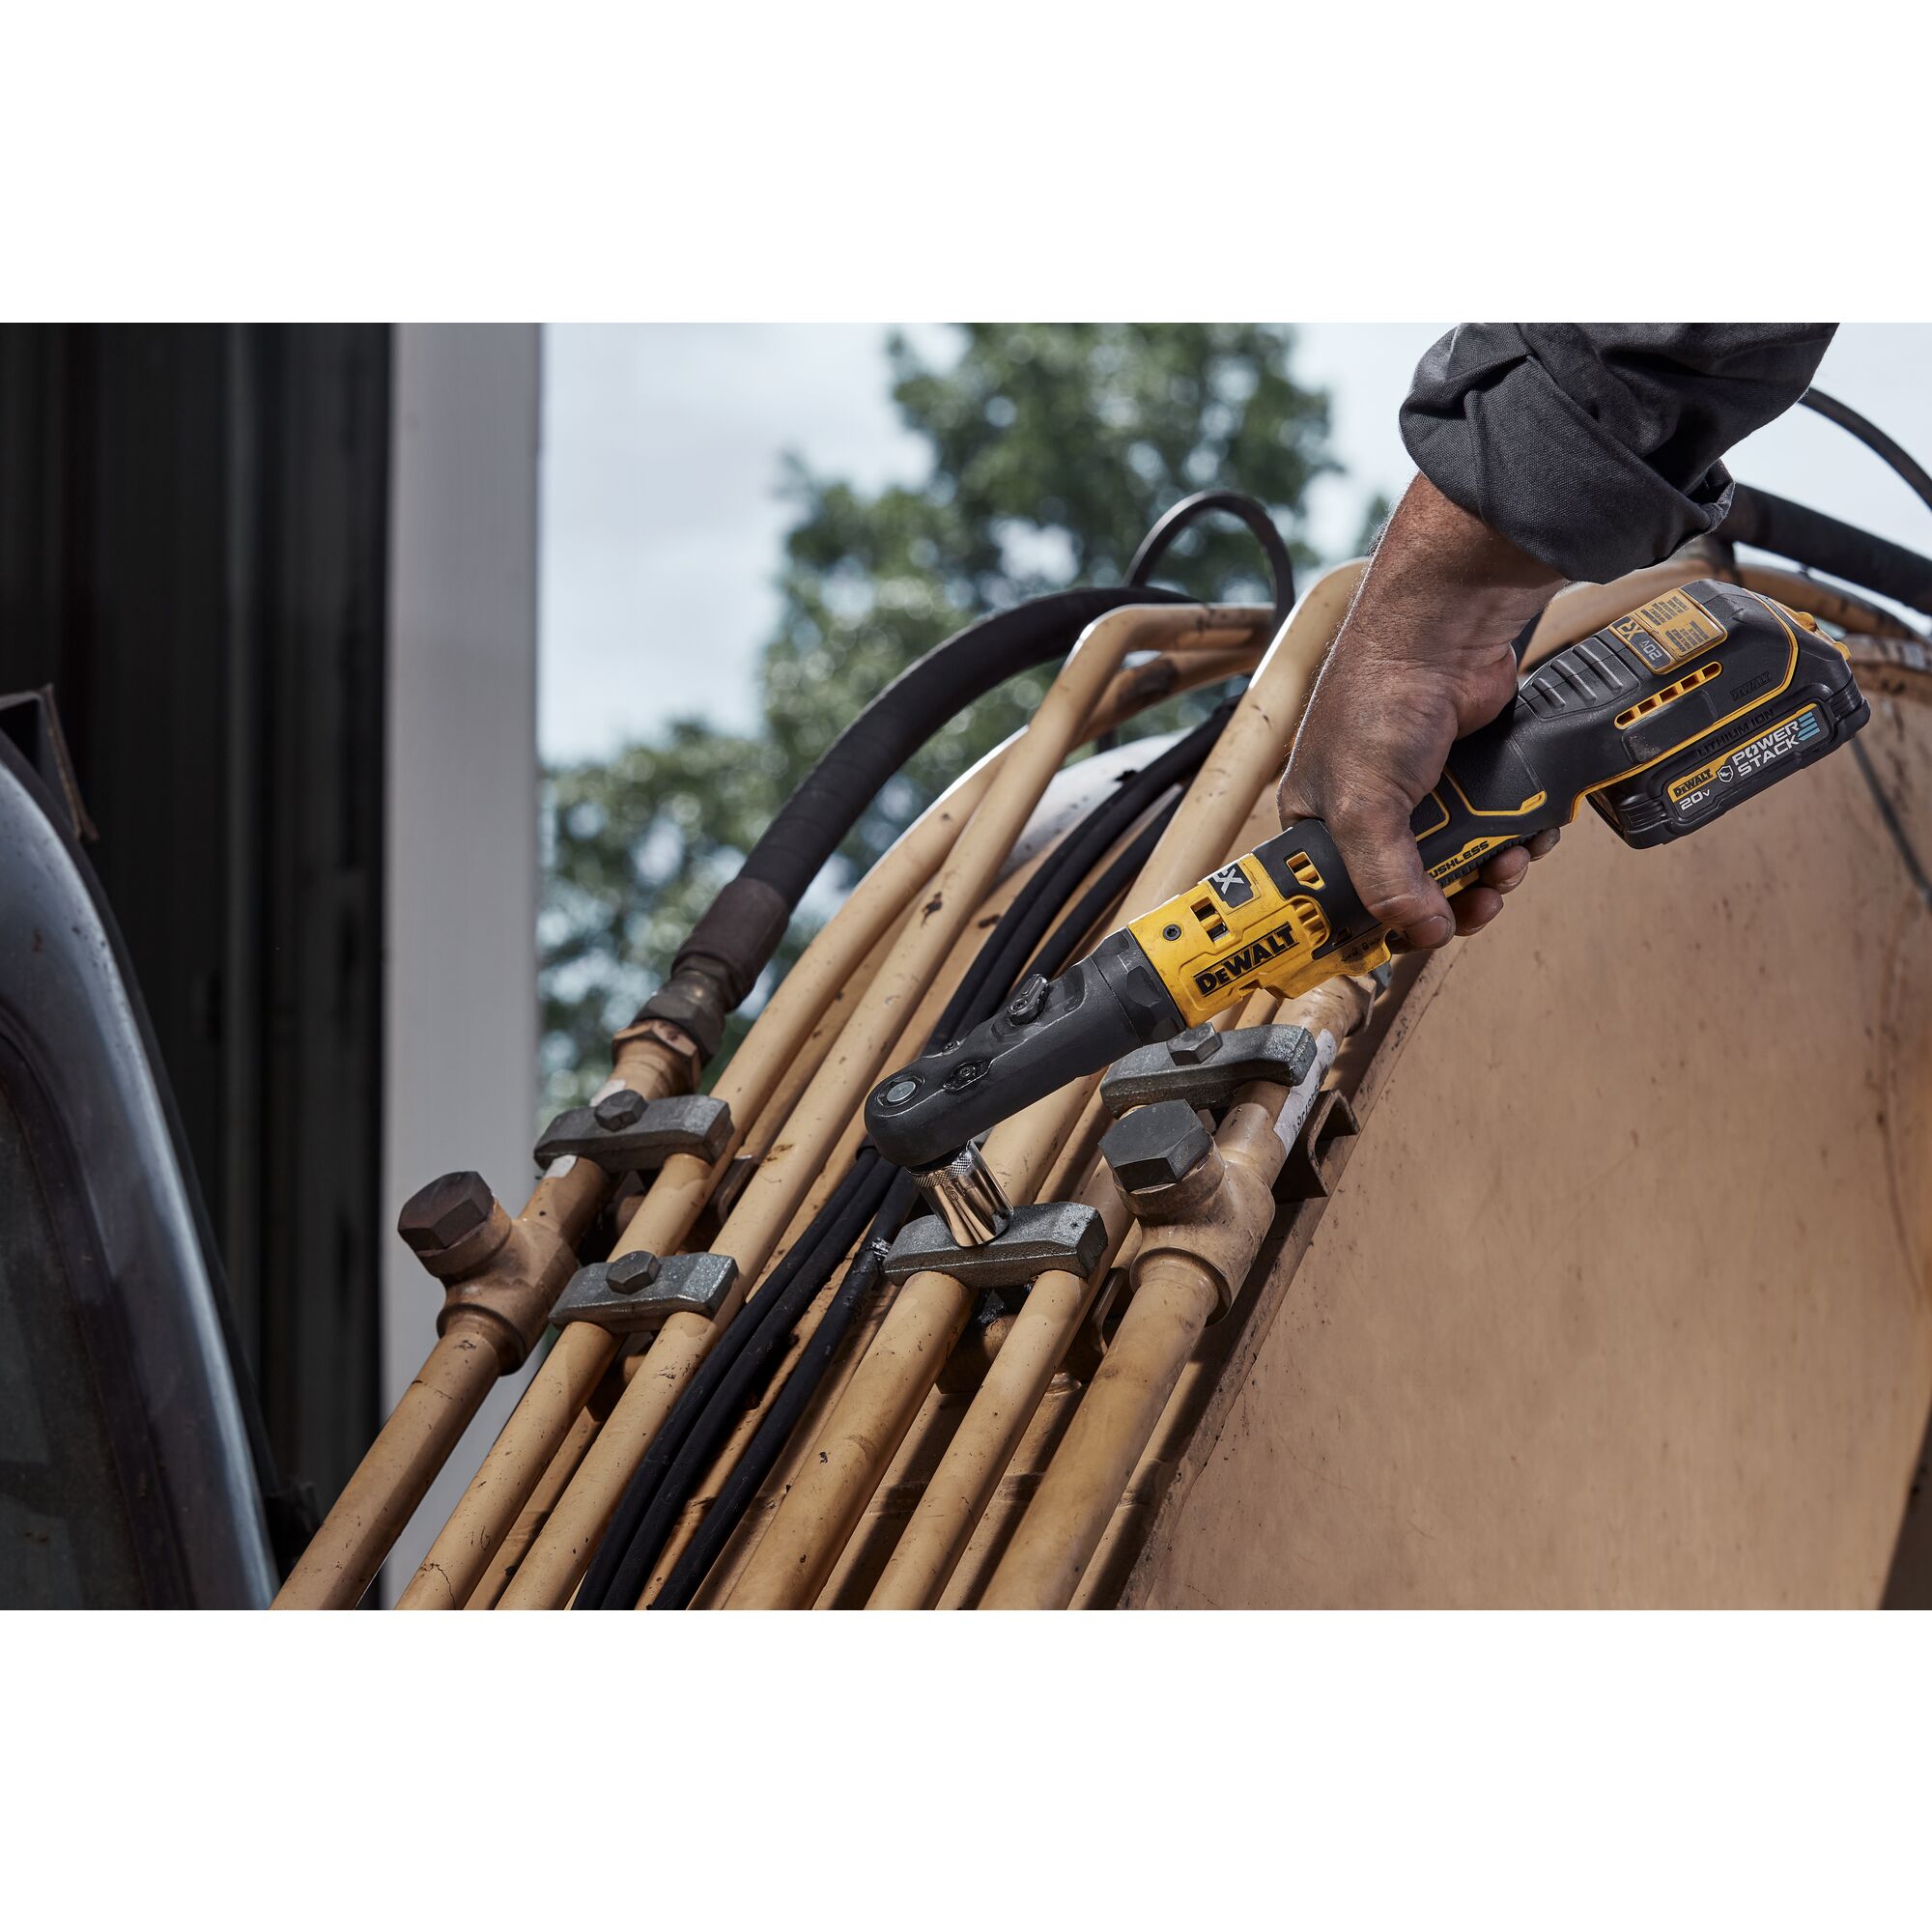  DEWALT 20V MAX Ratchet Set, 3/8 inch, 70 lbs of Torque, Battery  and Storage Bag Included (DCF513D1) : Tools & Home Improvement